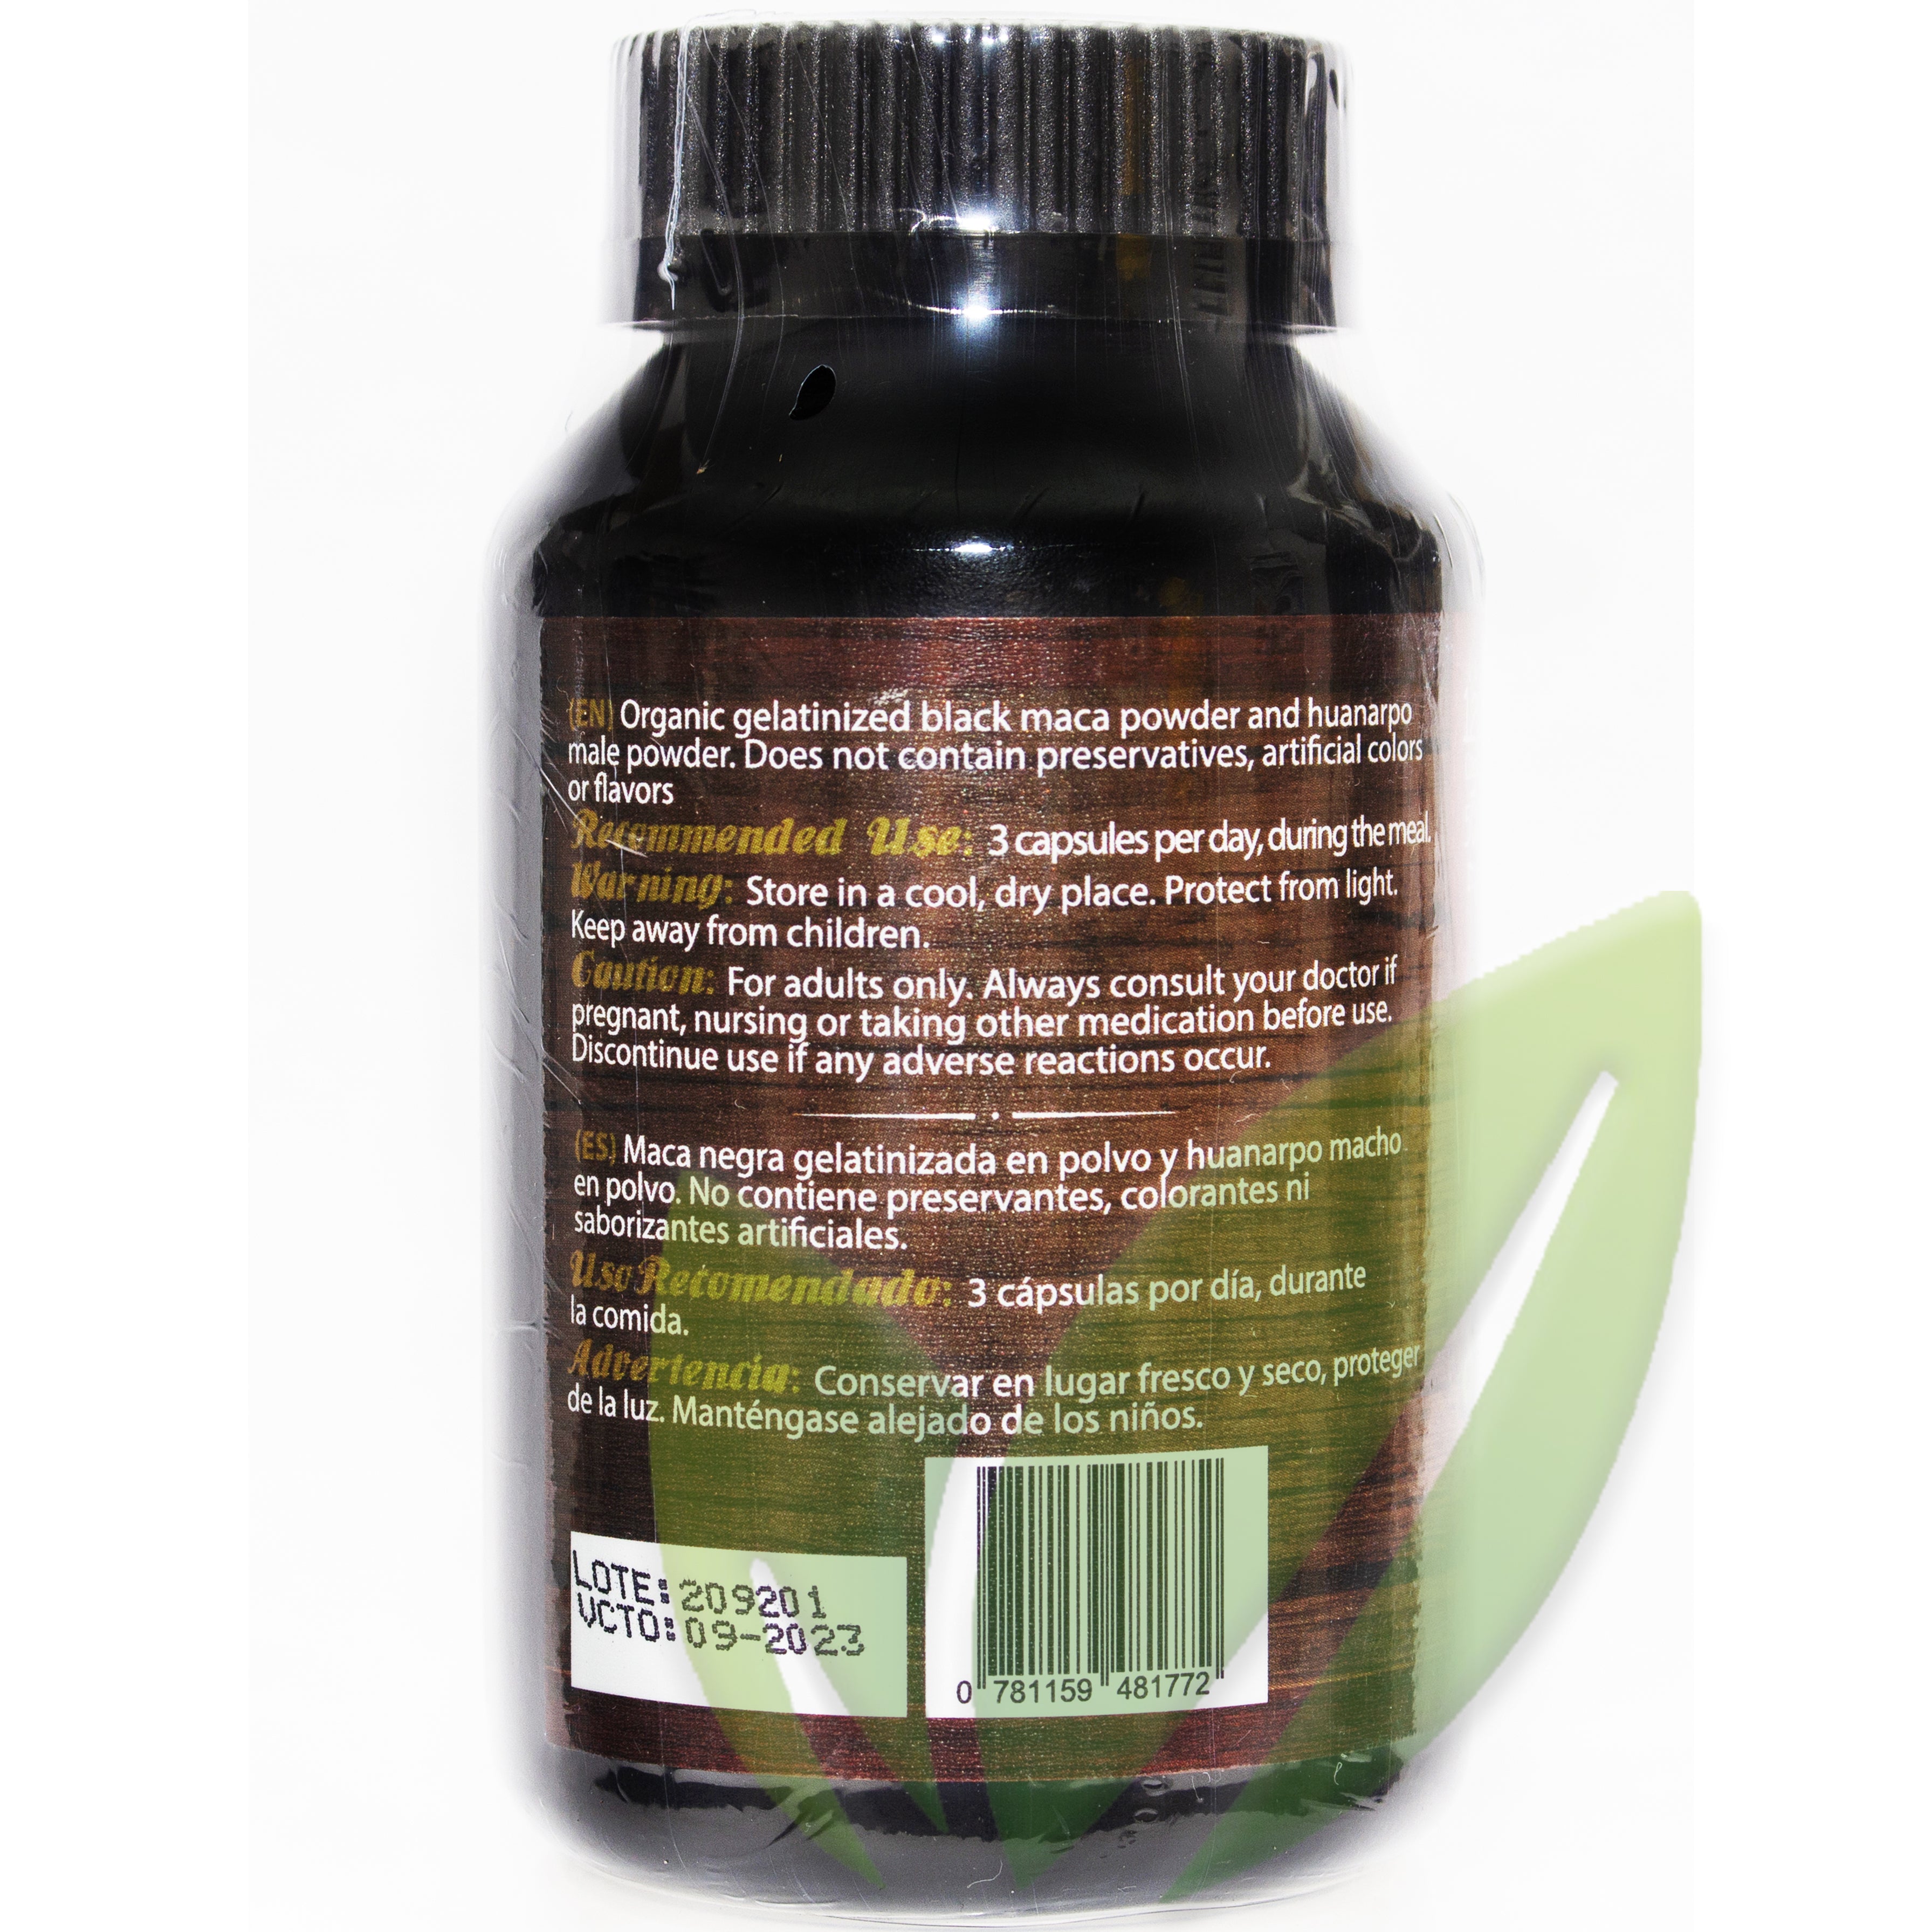 Huanarpo macho con maca negra 500 mg | 120 cápsulas